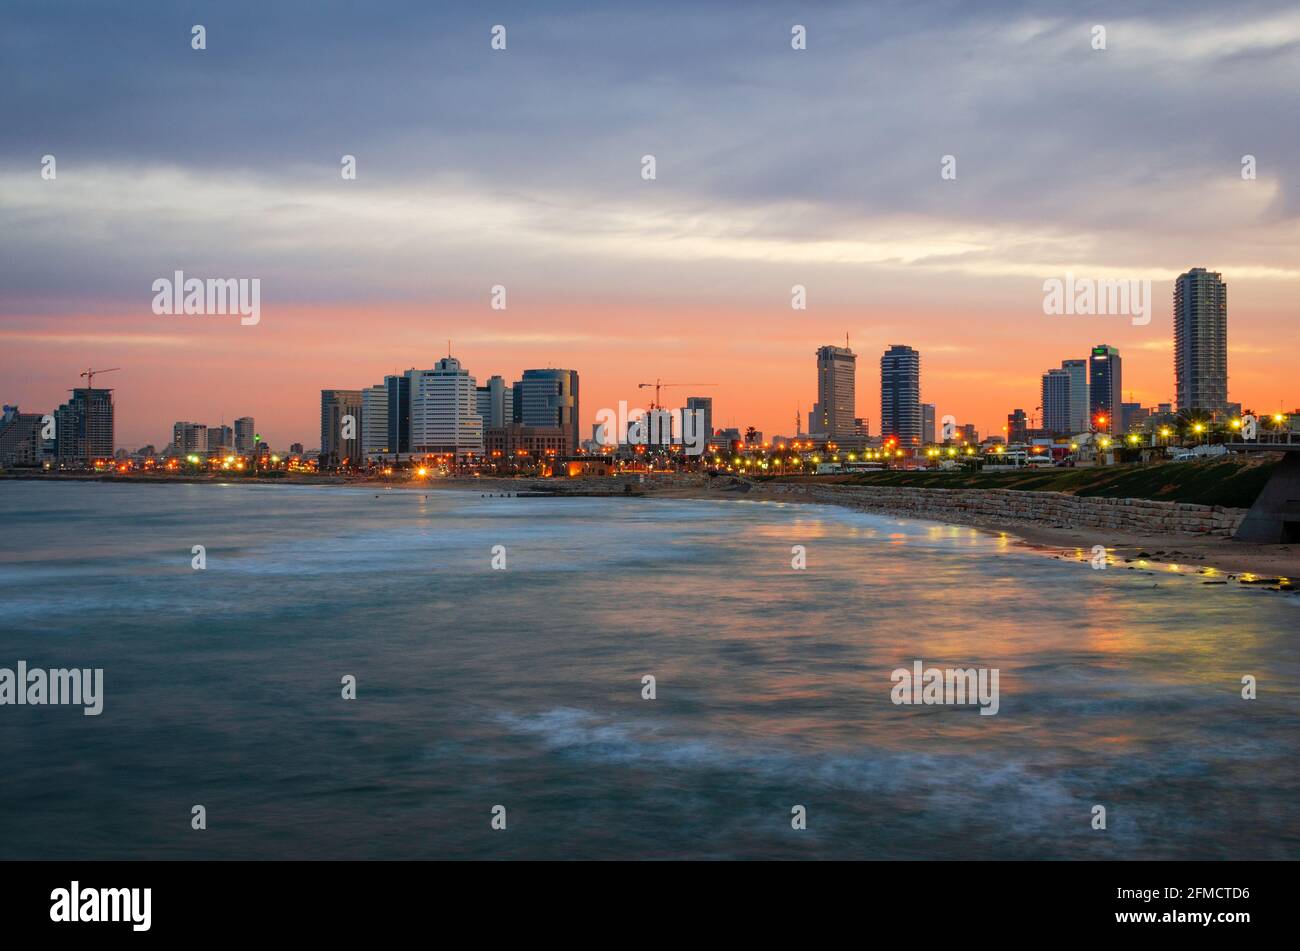 Tel Aviv, Israel city skyline on the shore of the Mediterranean at dusk. Stock Photo